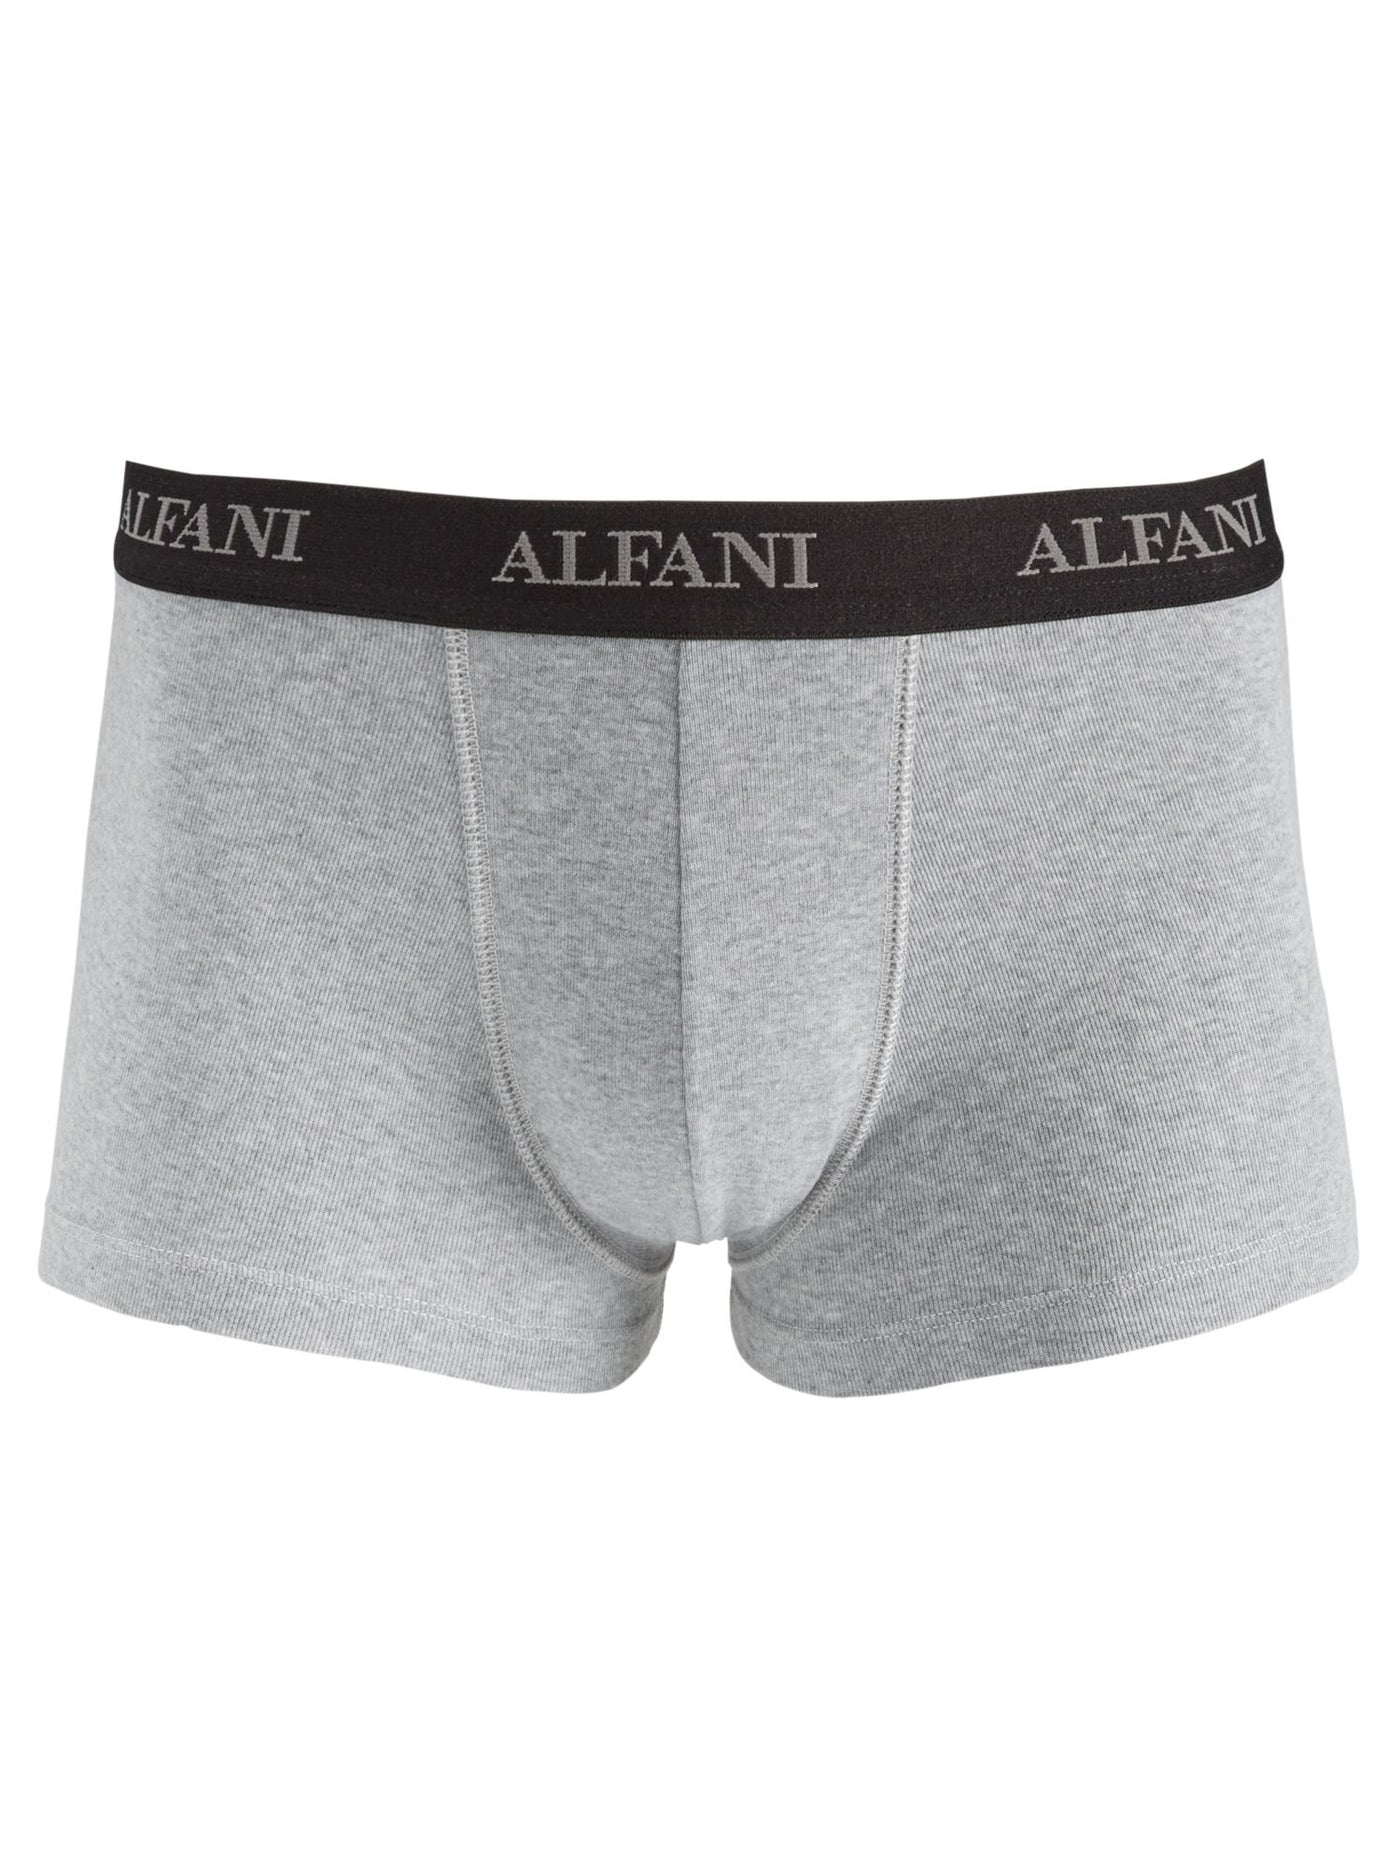 ALFANI Intimates 5 Pack Gray Logo Waistband Trunk Underwear L